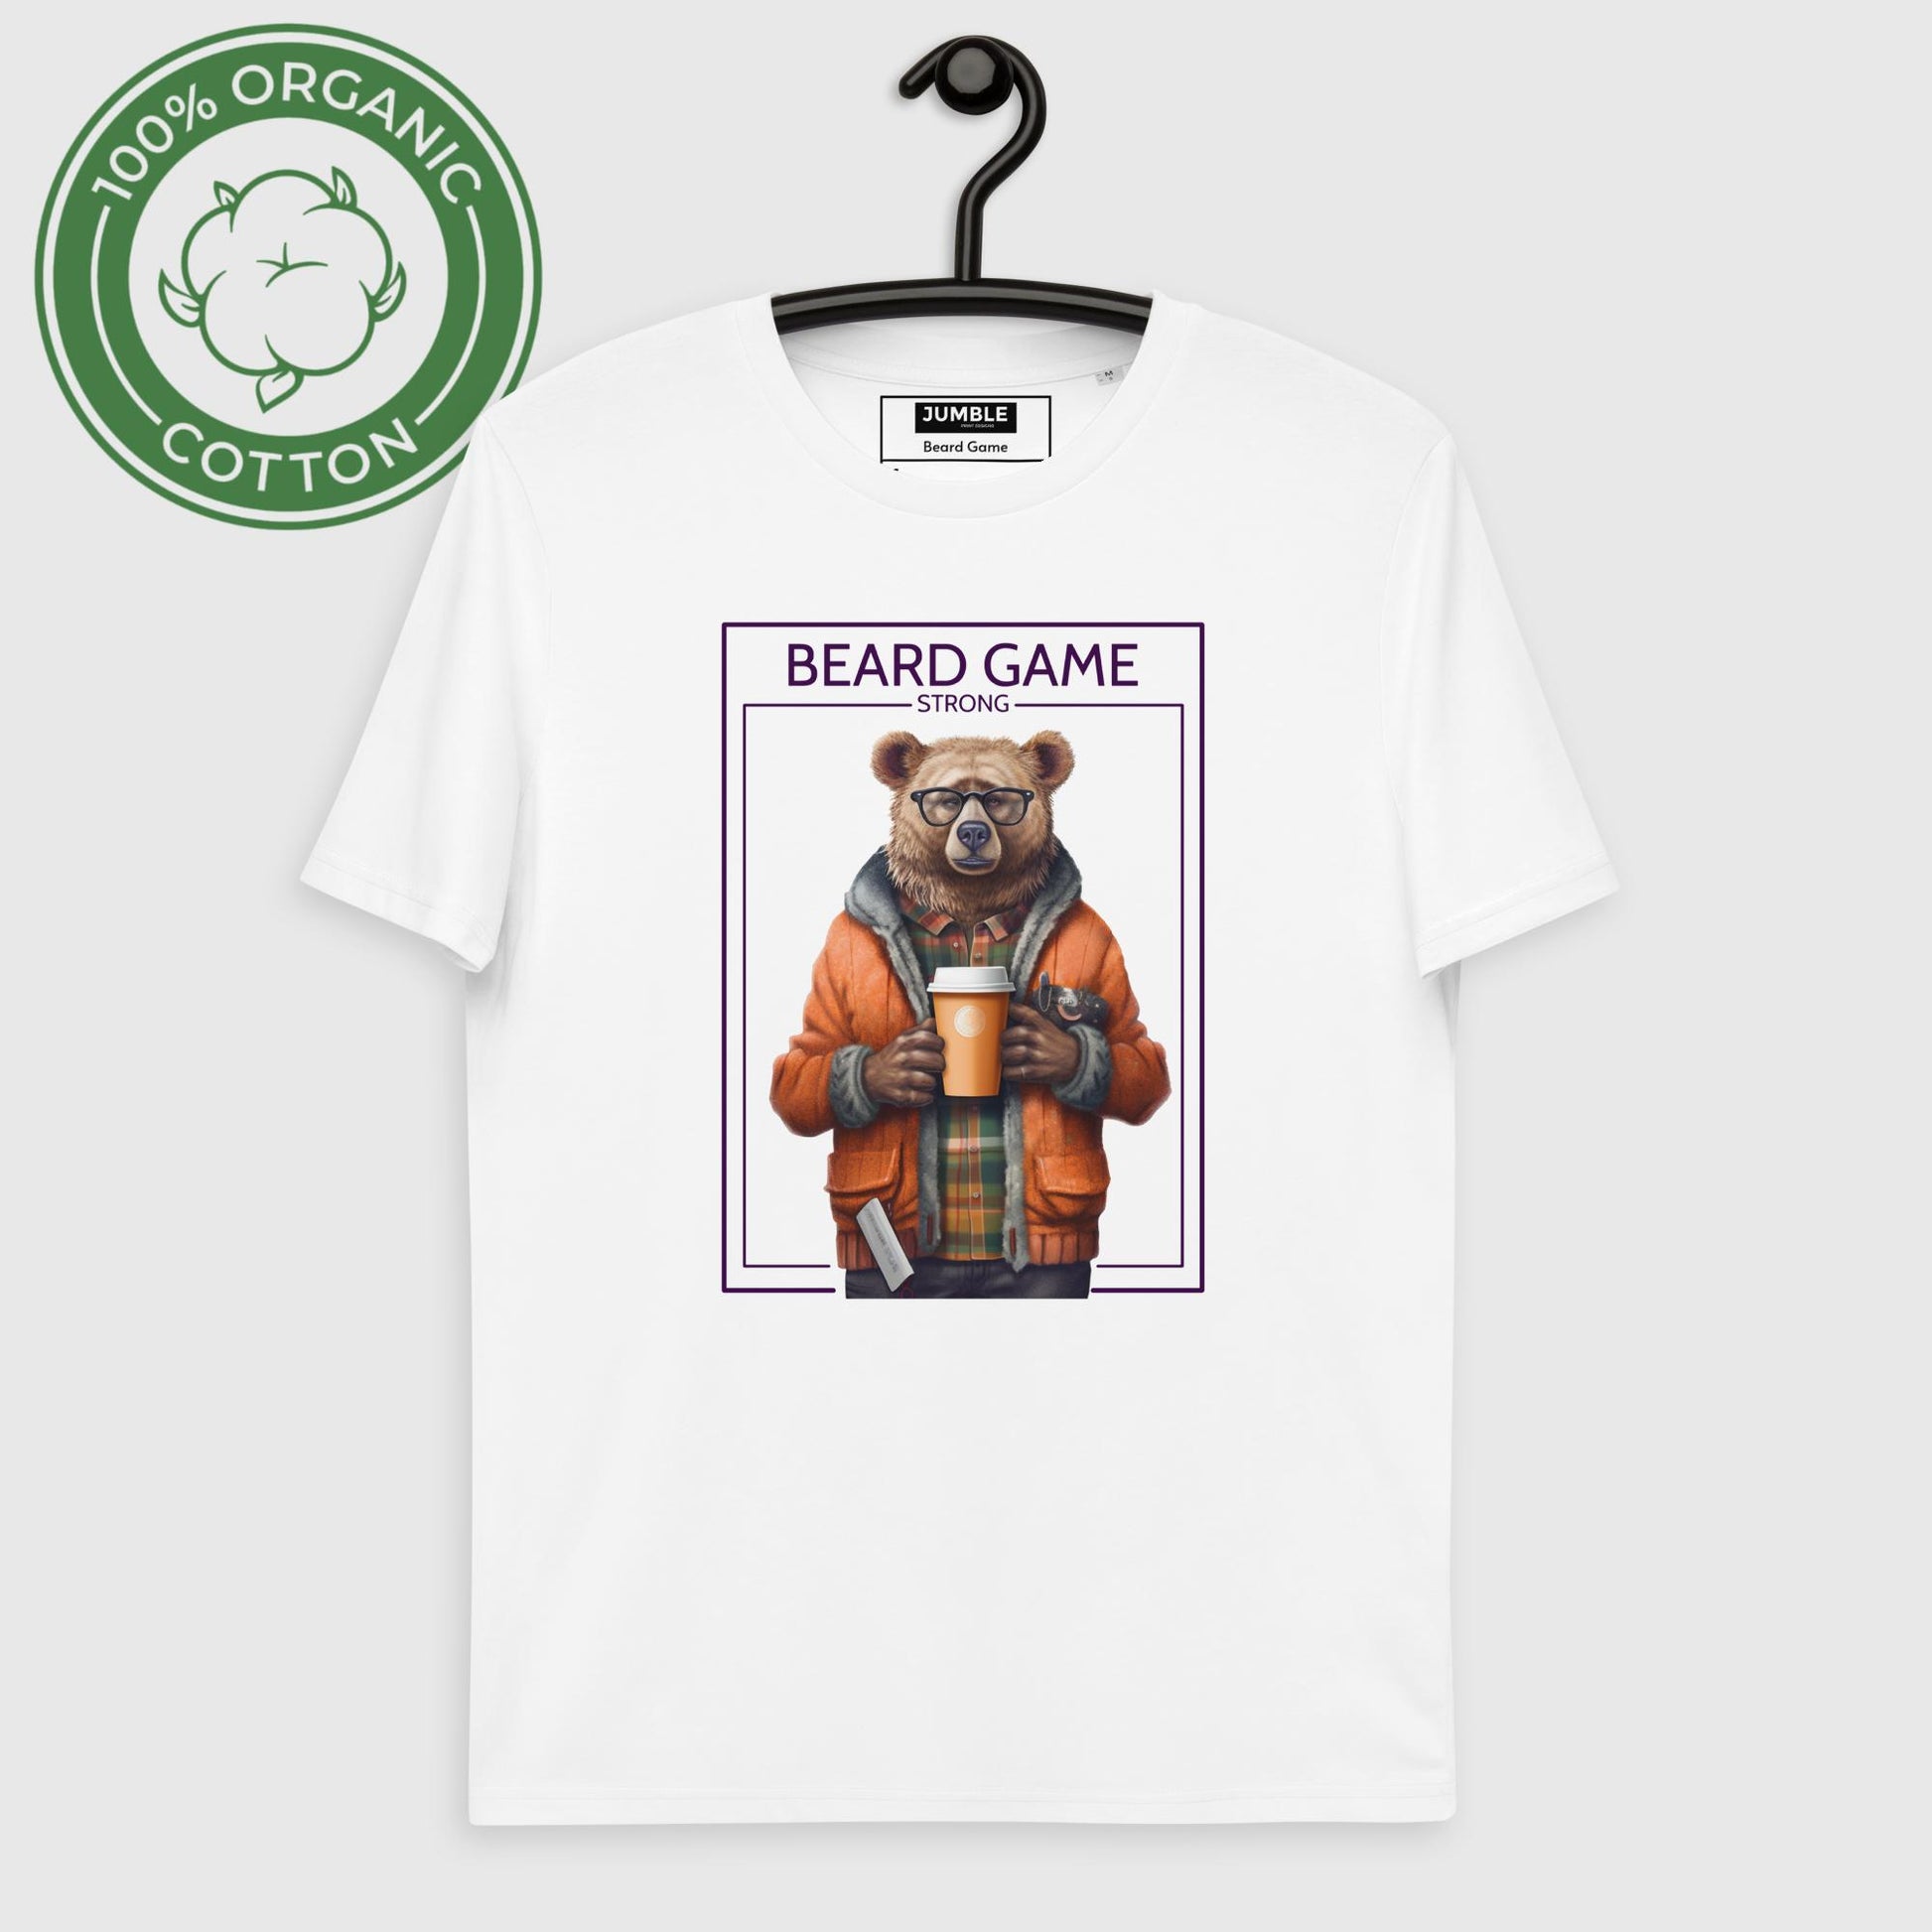 Beard Game Organic Cotton T-shirt in White on hanger